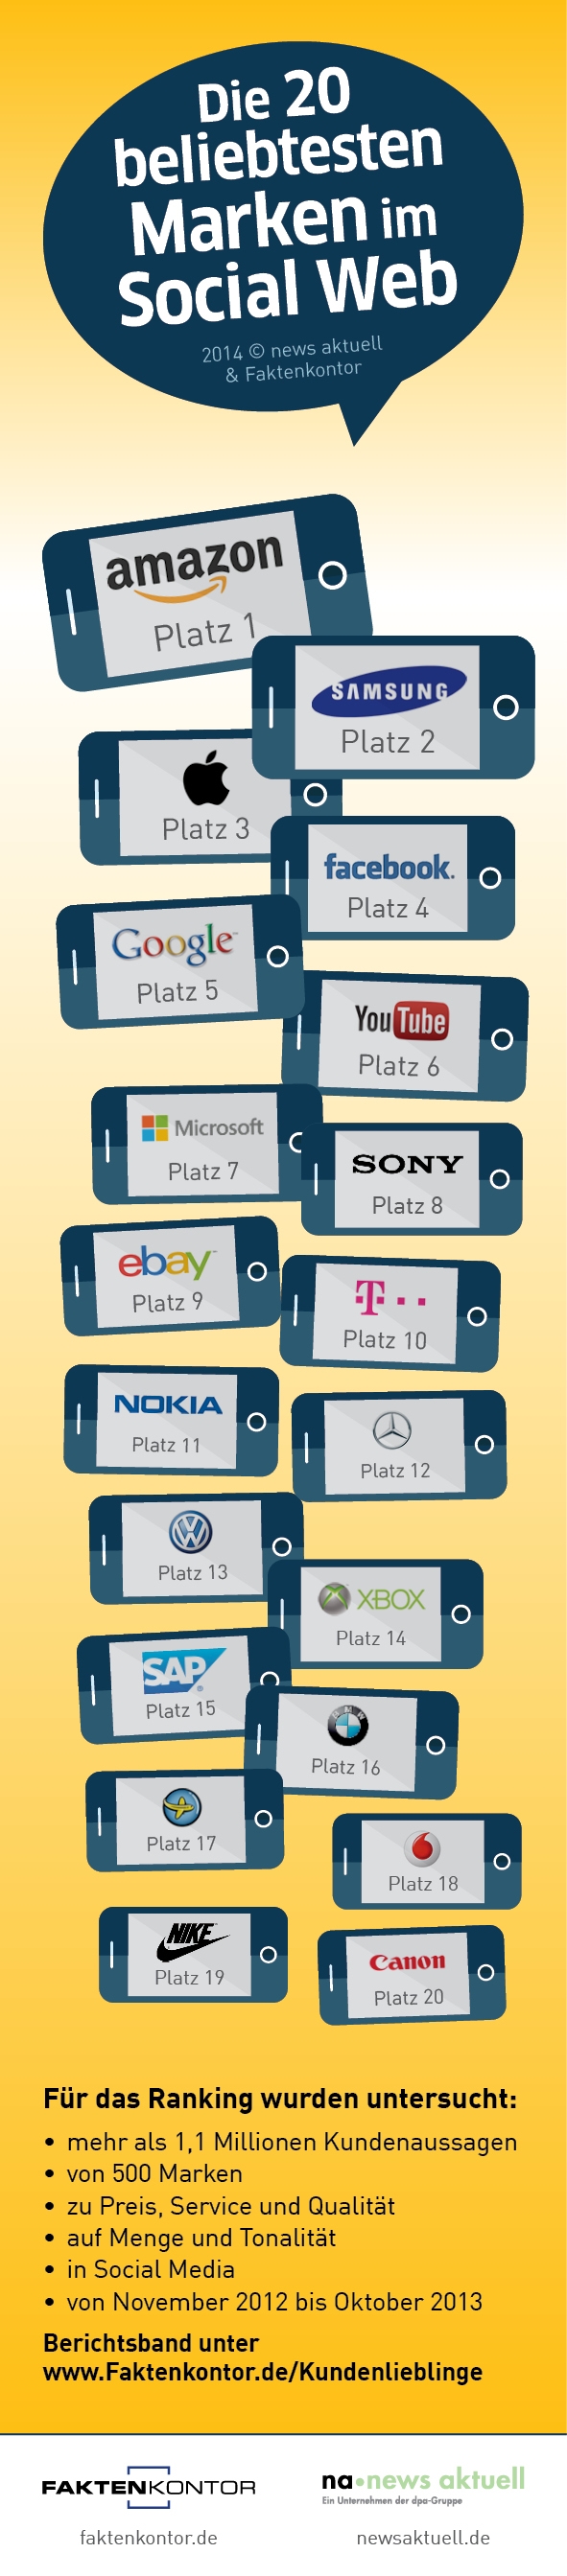 Kundenlieblinge: Die 20 beliebtesten Marken im Social Web